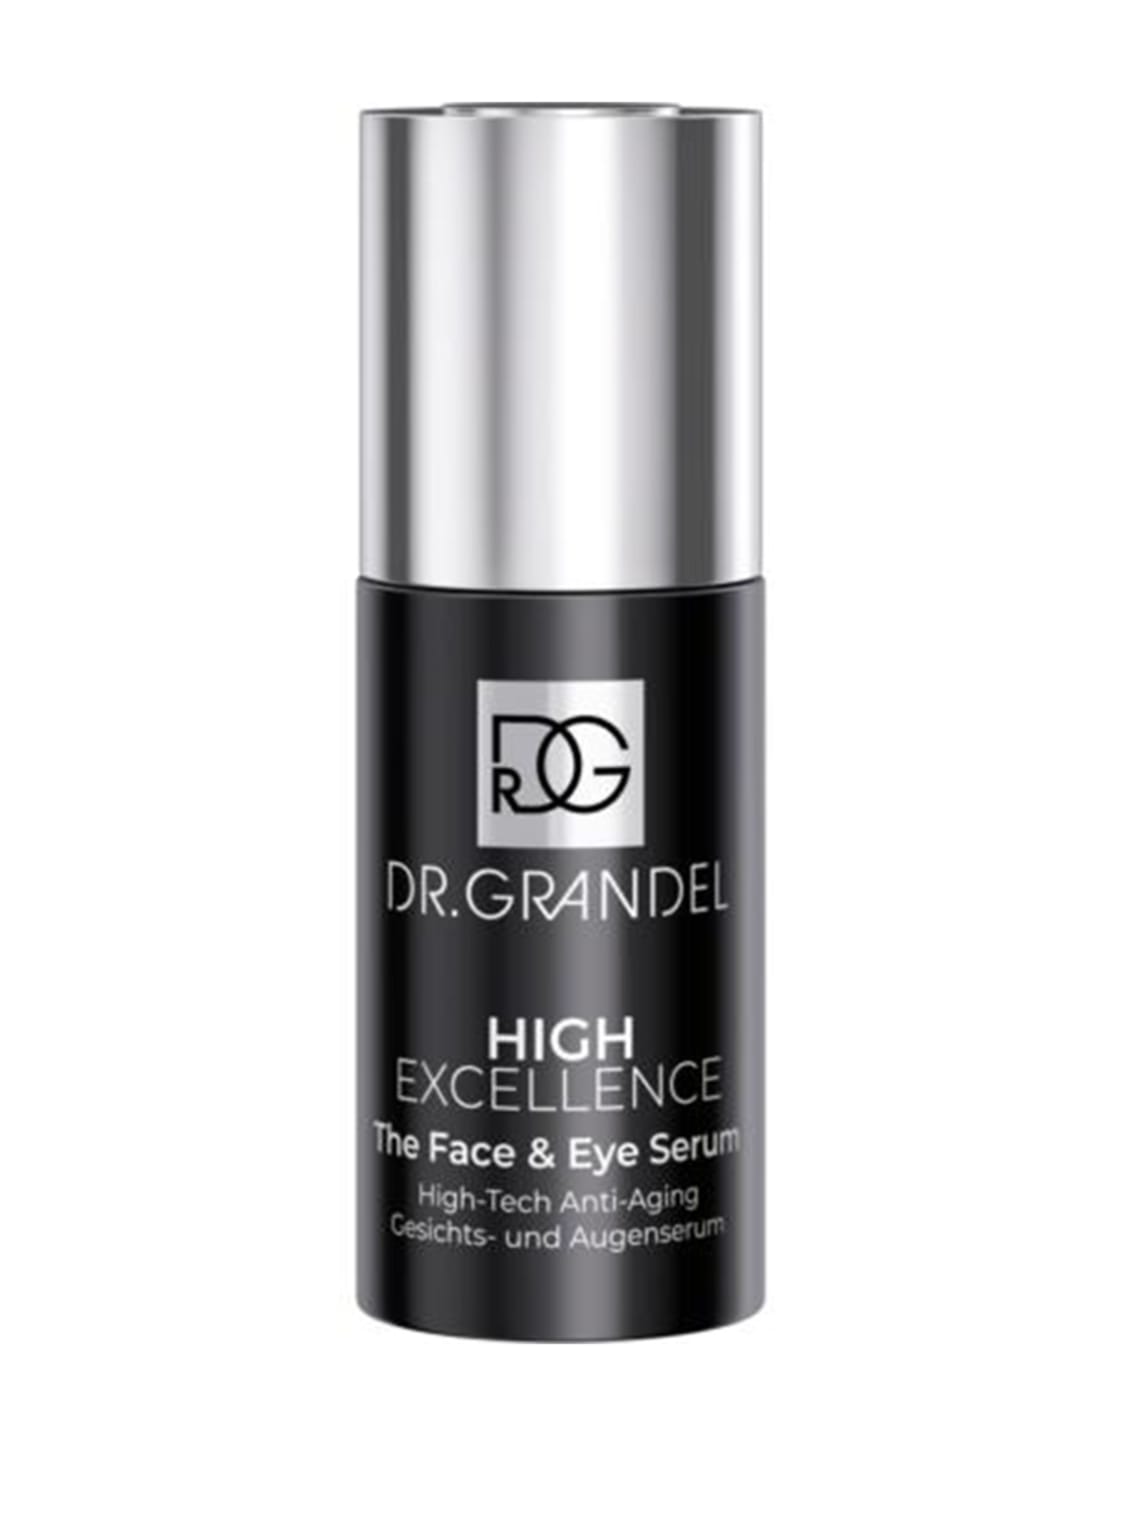 Dr. Grandel High Excellence The Face & Eye Serum 30 ml von DR. GRANDEL